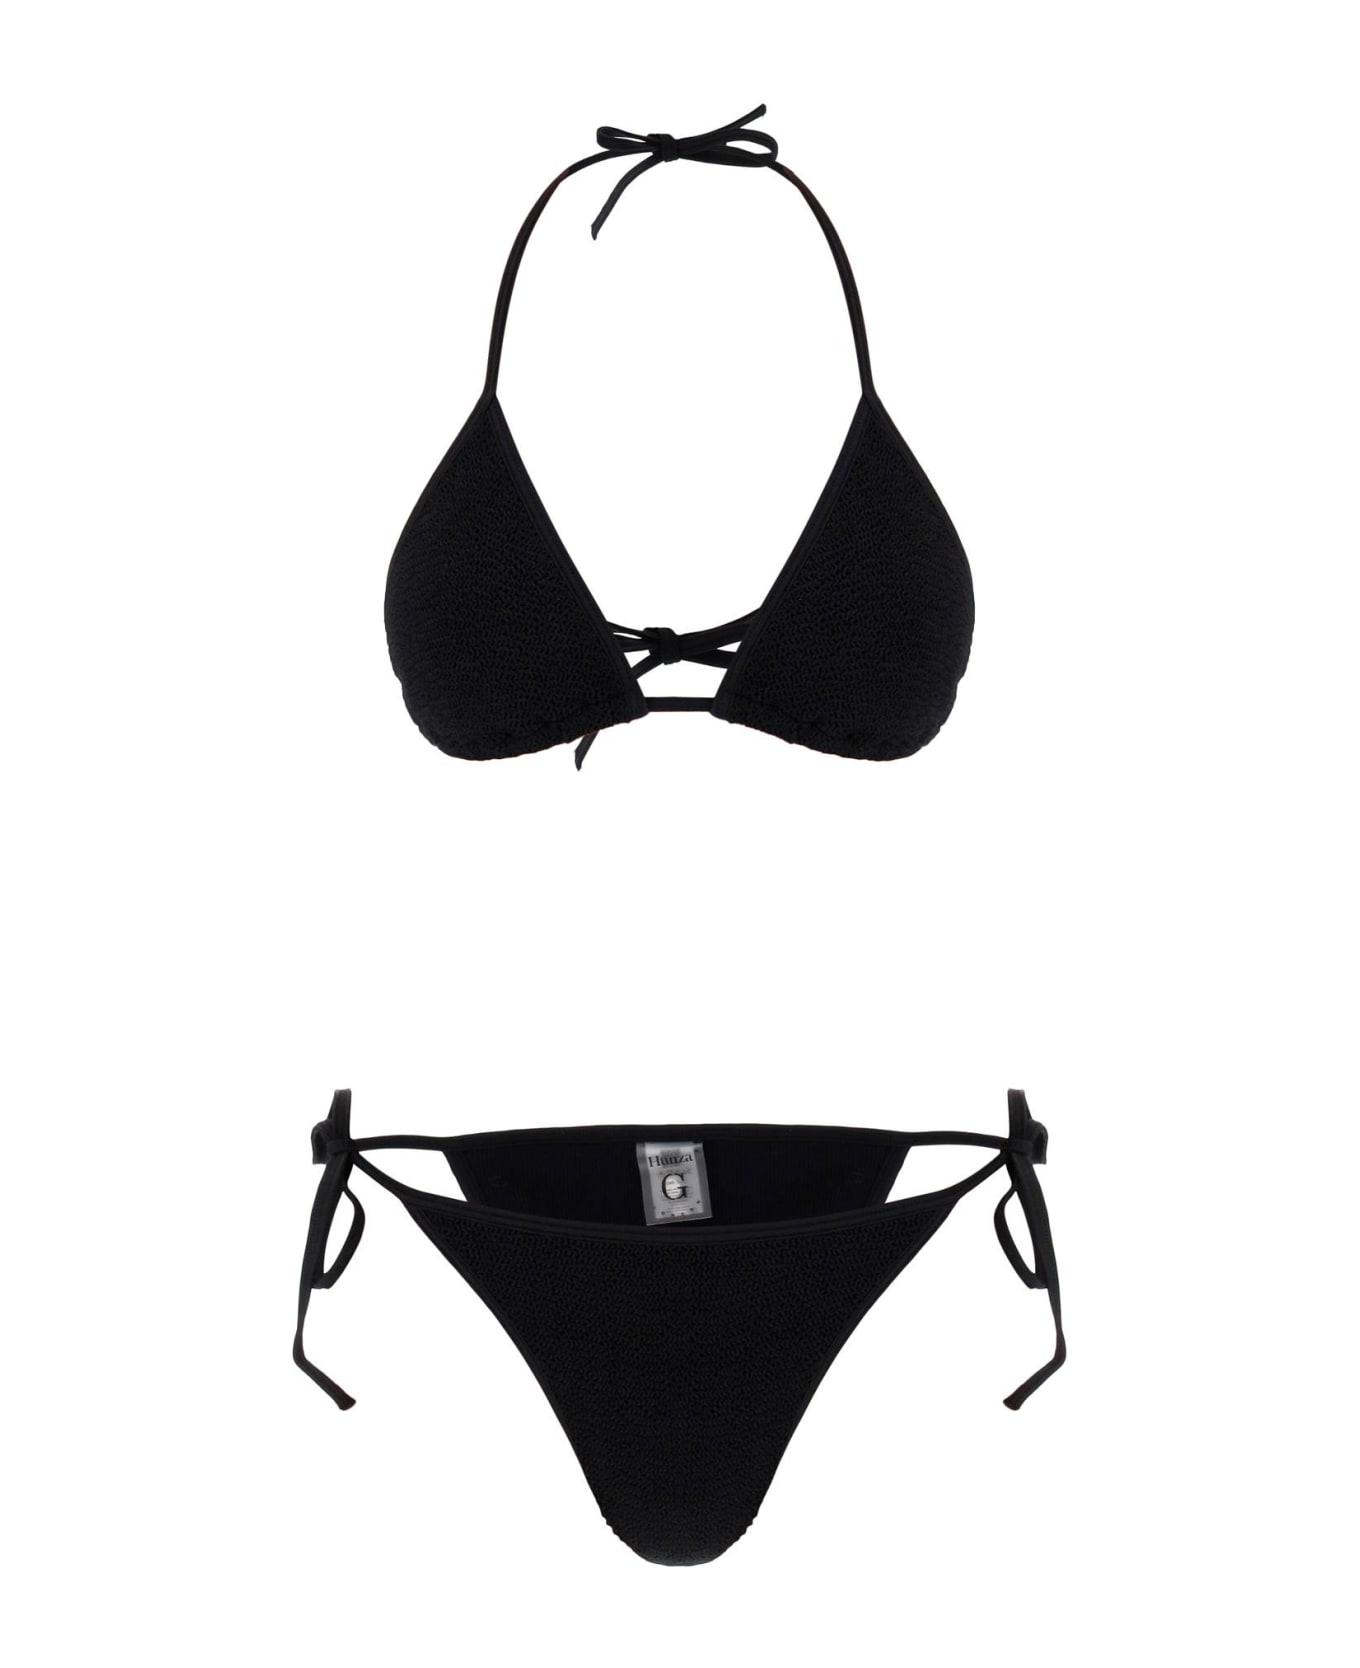 Hunza G Gina Bikini Set - BLACK (Black)